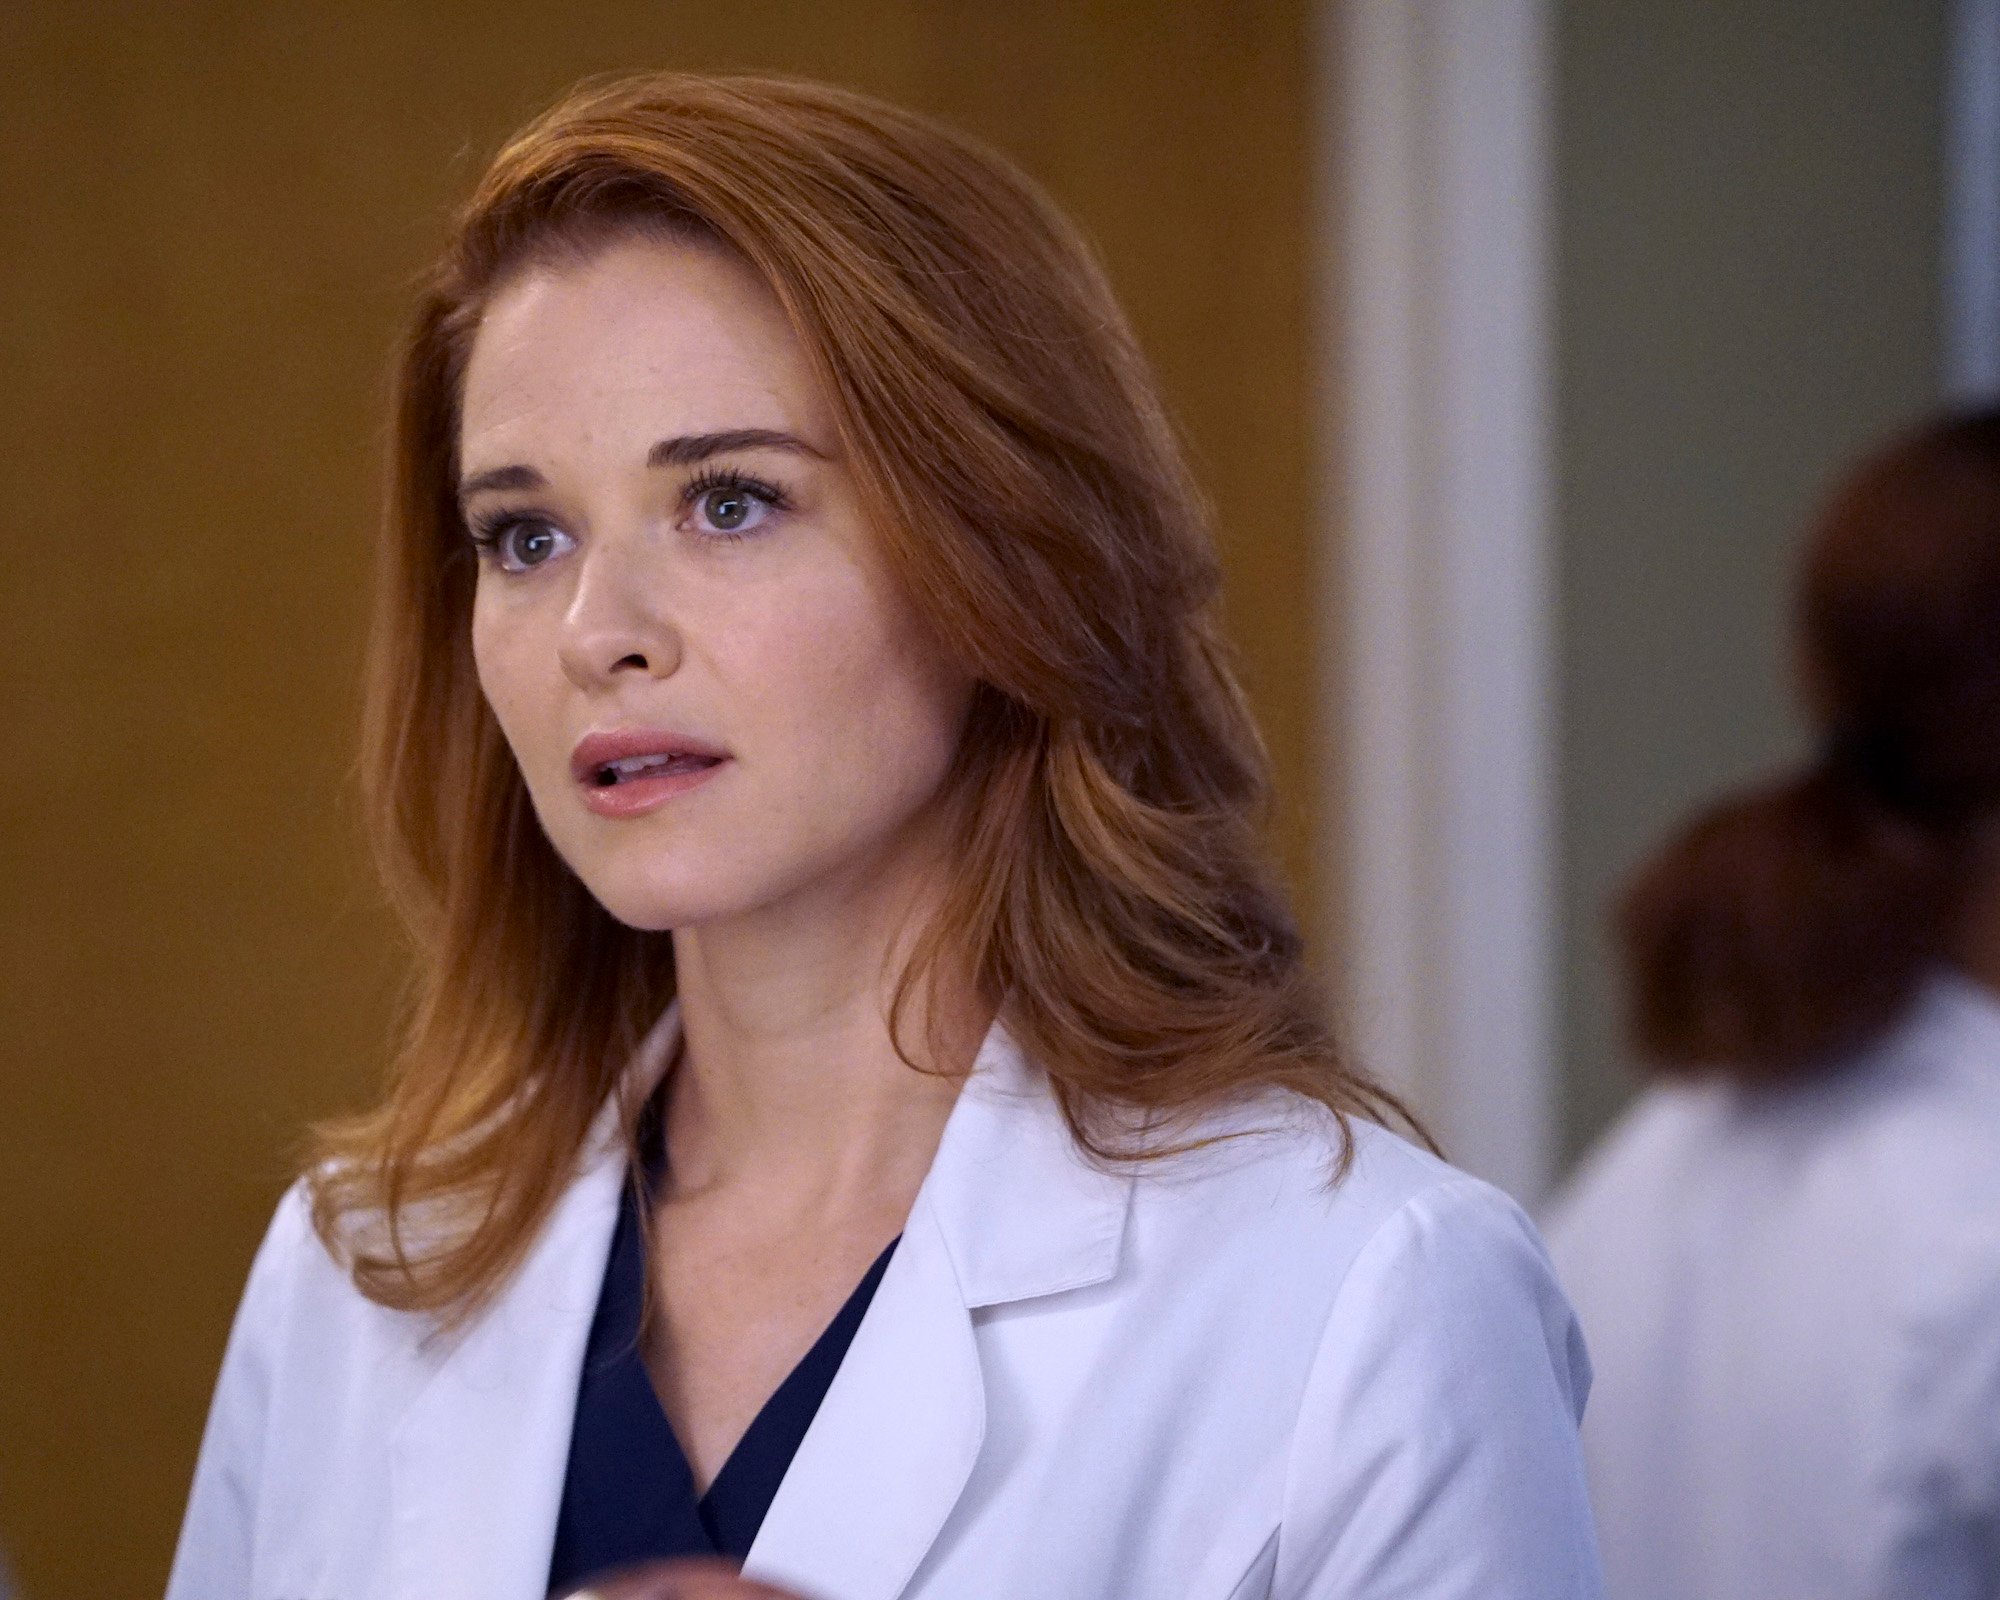 Sarah Drew wearing white scrubs in 'Grey's Anatomy' Season 13.